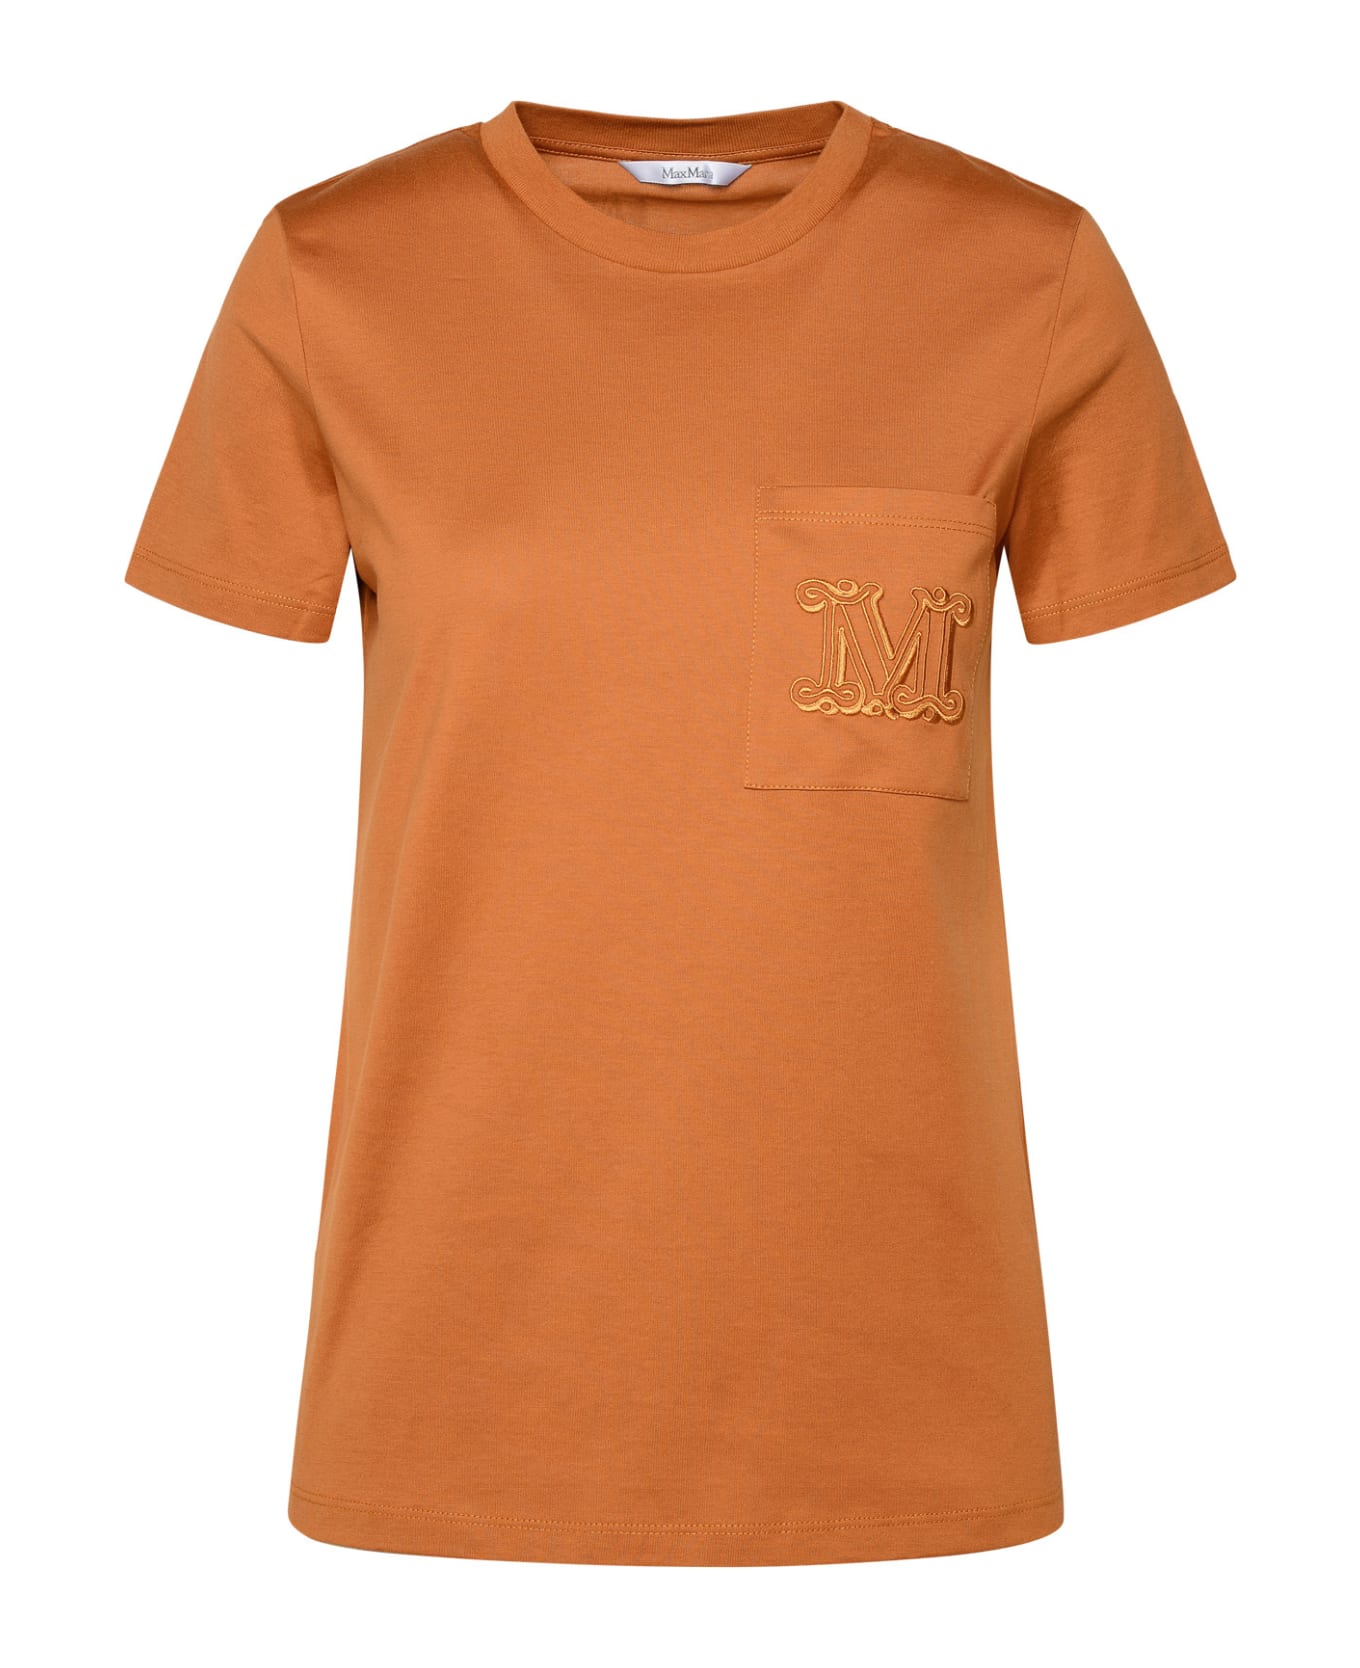 Max Mara Caramel Cotton T-shirt - Brown Max Mara Caramel Cotton T-shirt - Brown Max Mara Caramel Cotton T-shirt